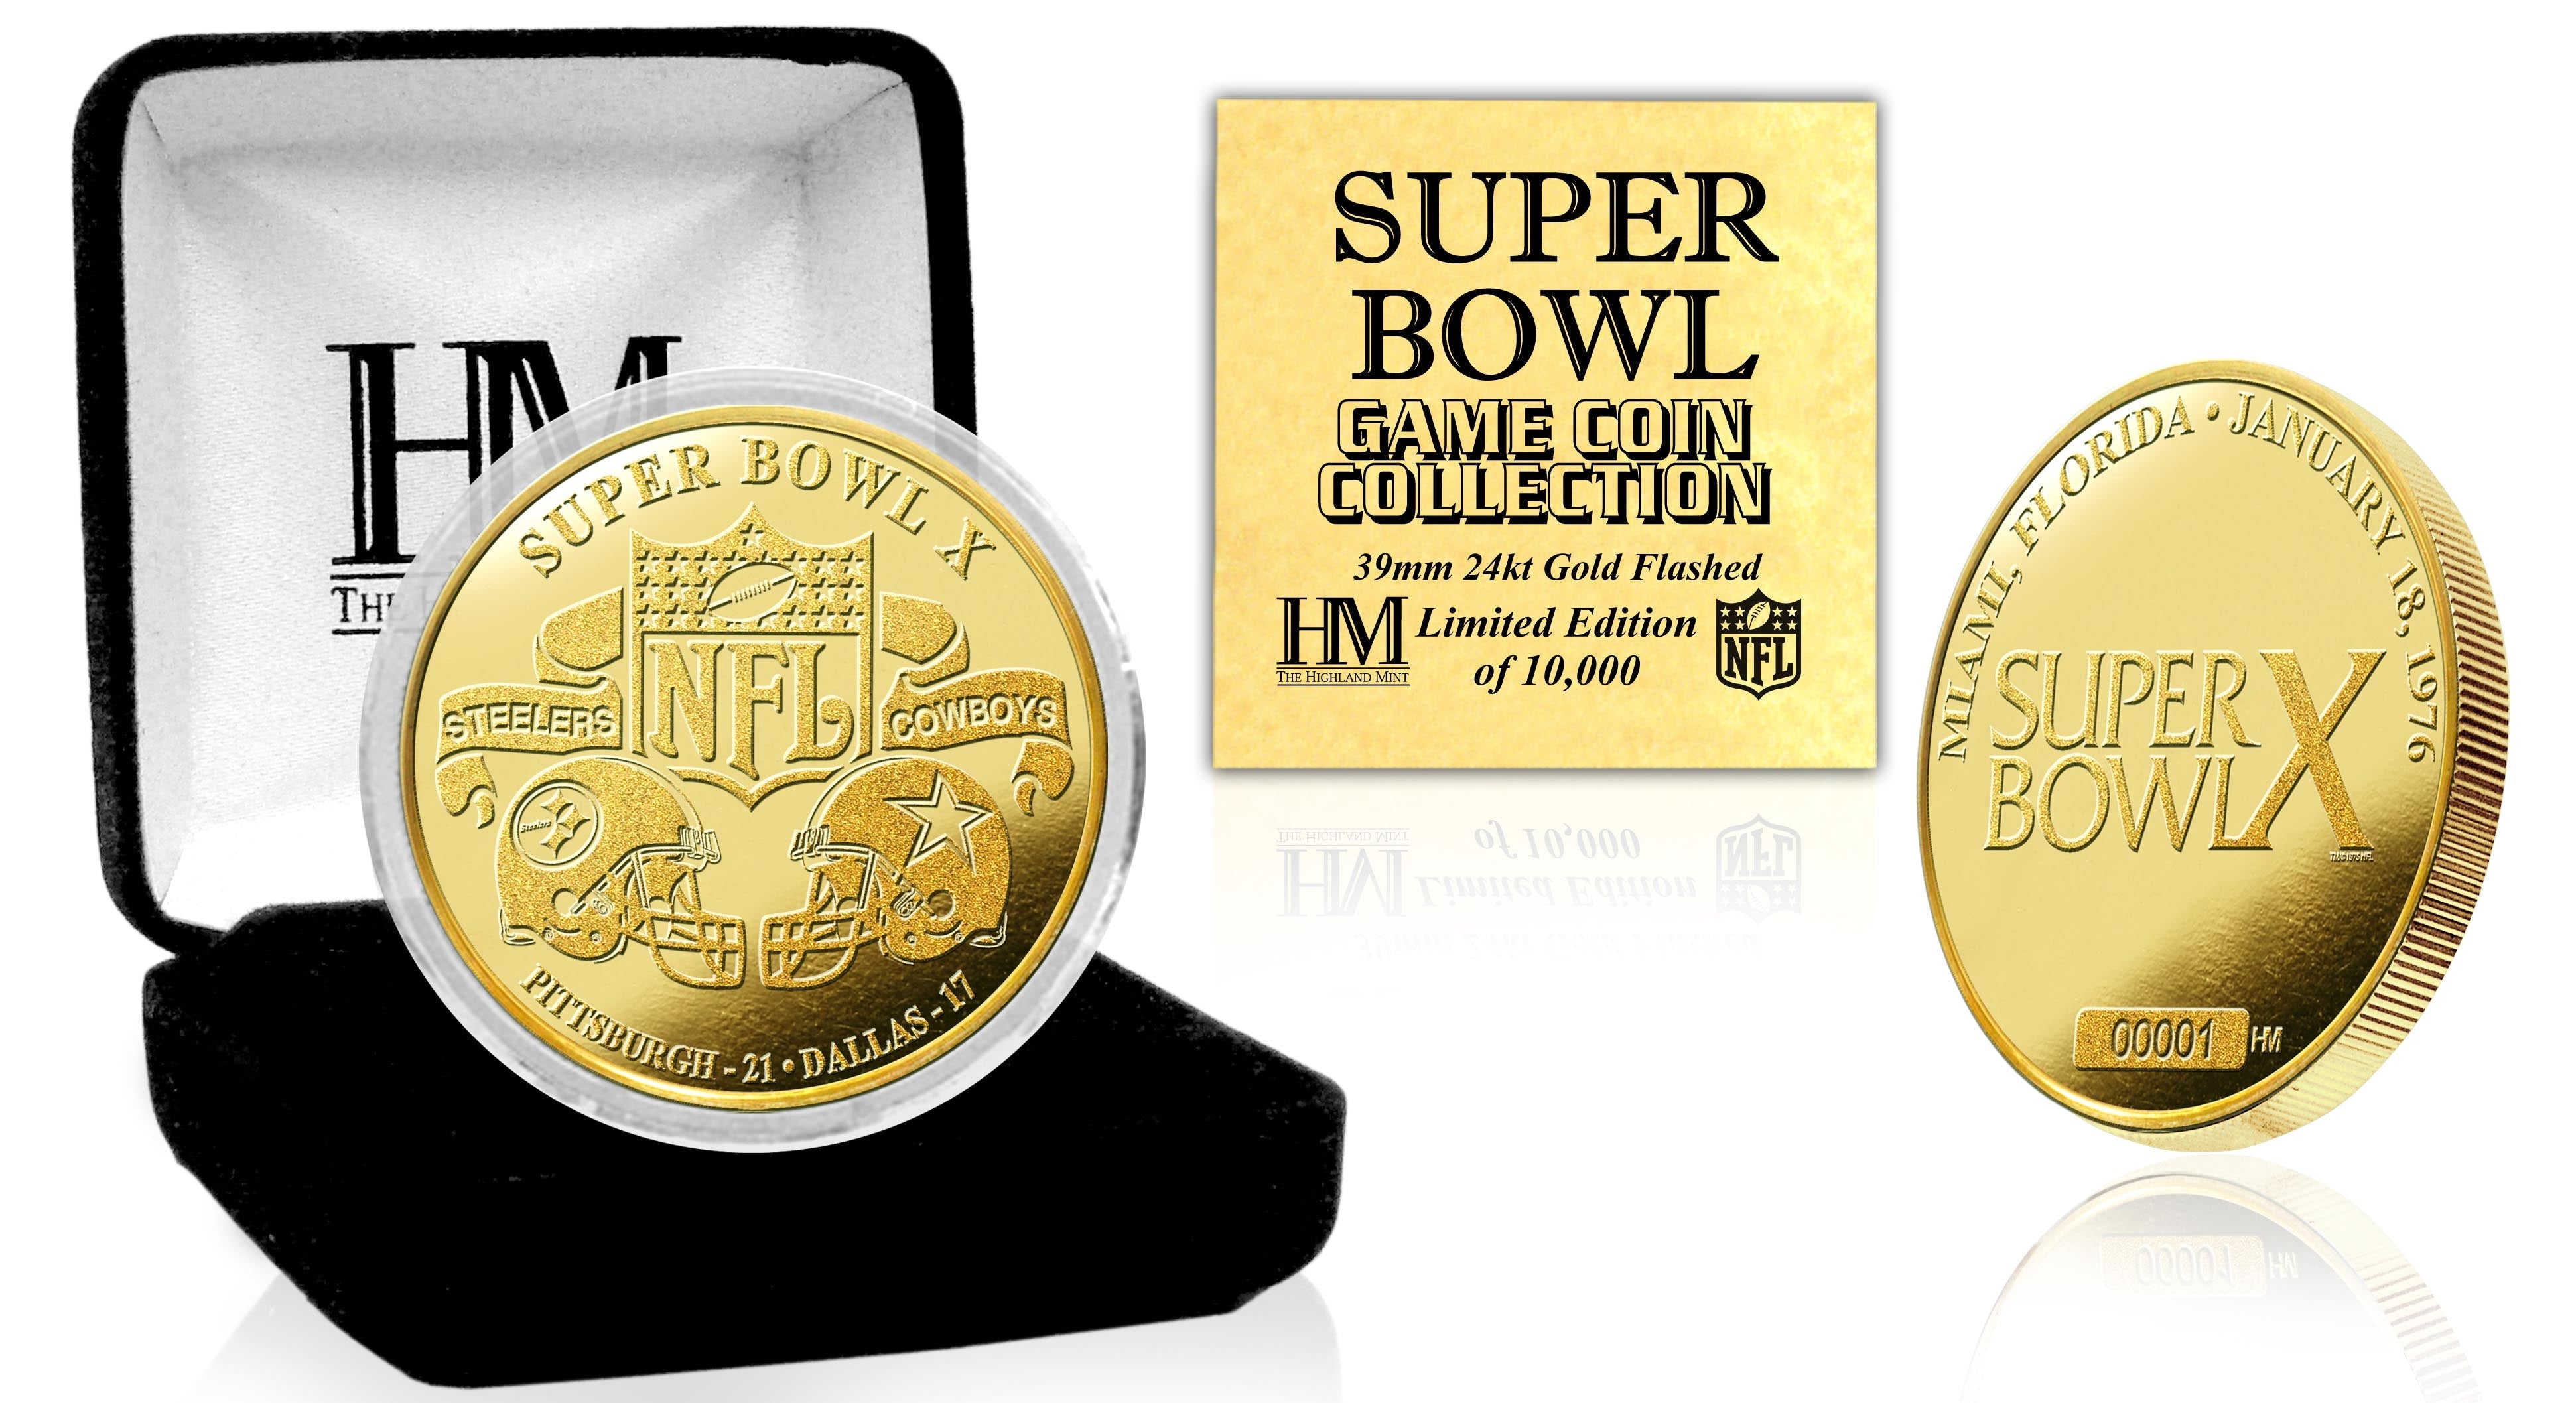 Super Bowl X 24kt Gold Flip Coin